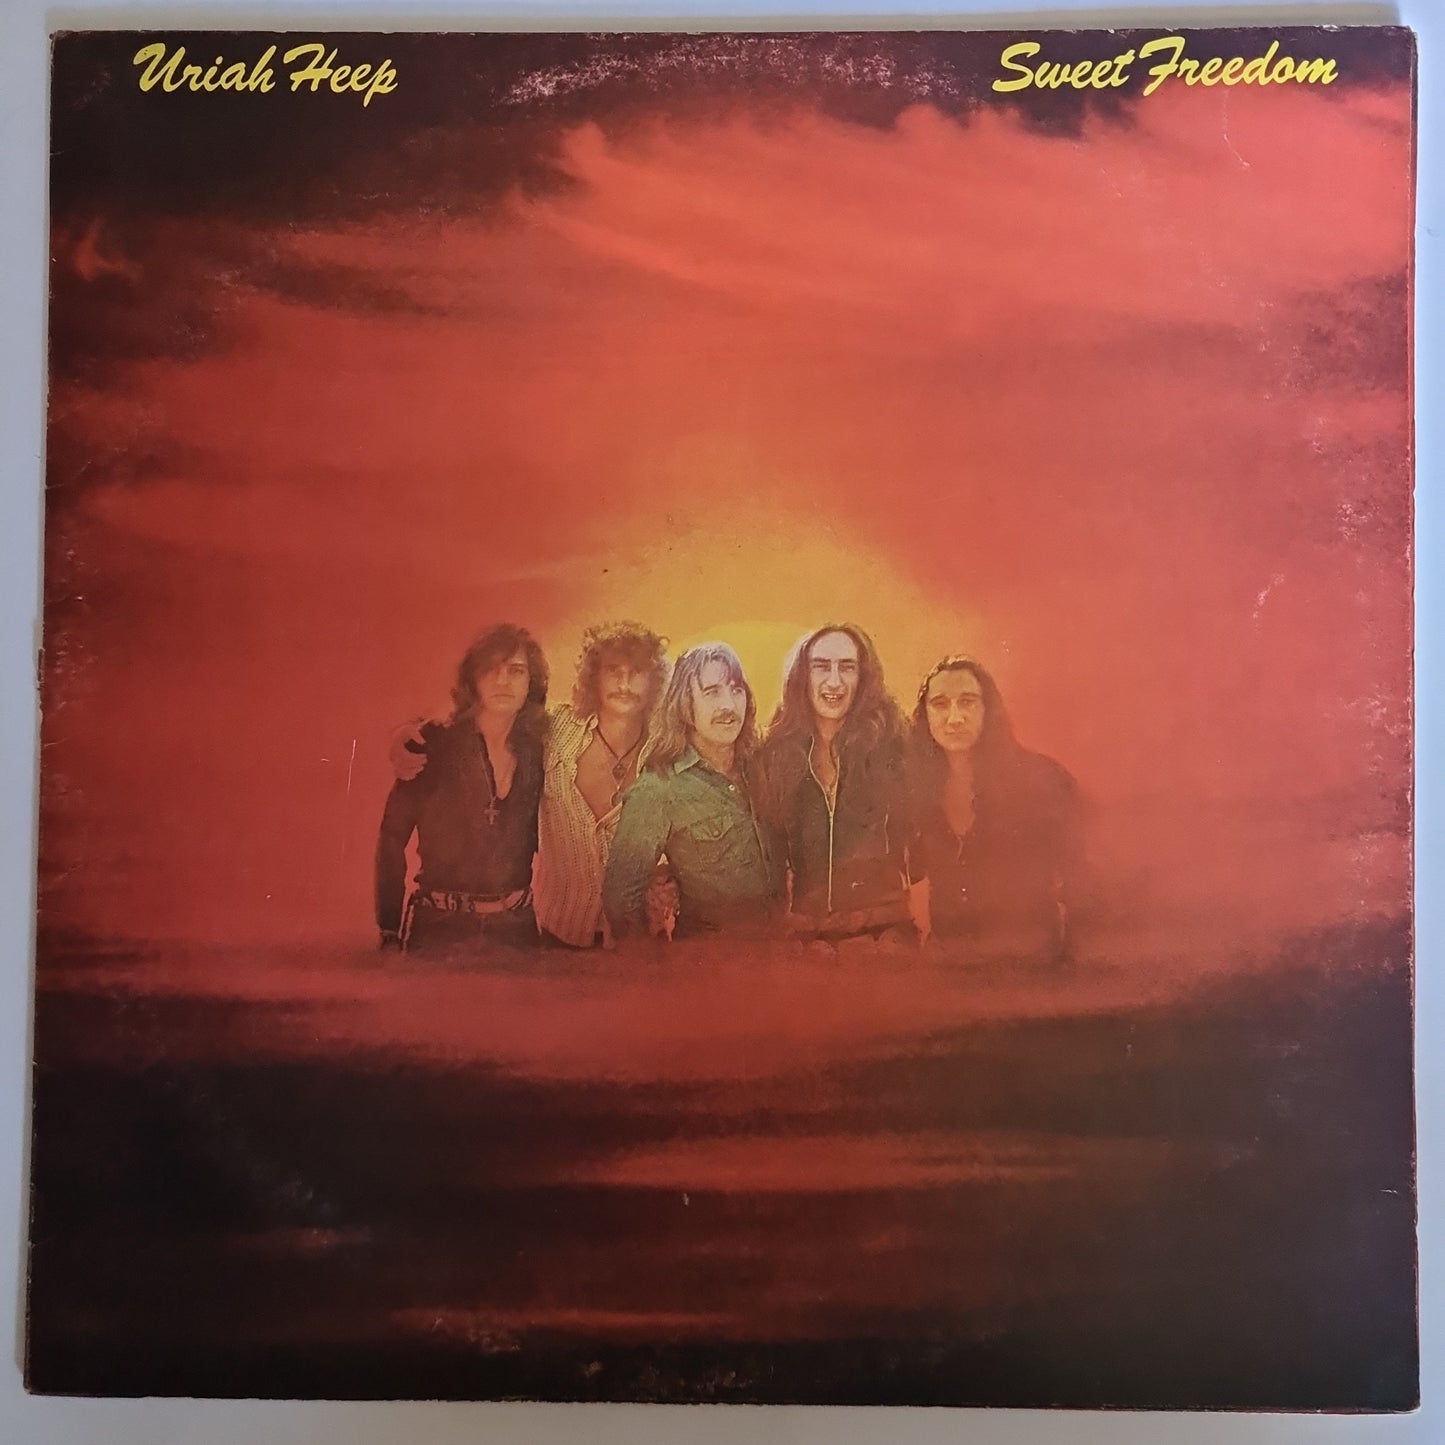 Uriah Heep – Sweet Freedom - 1973 (Gatefold) - Vinyl Record